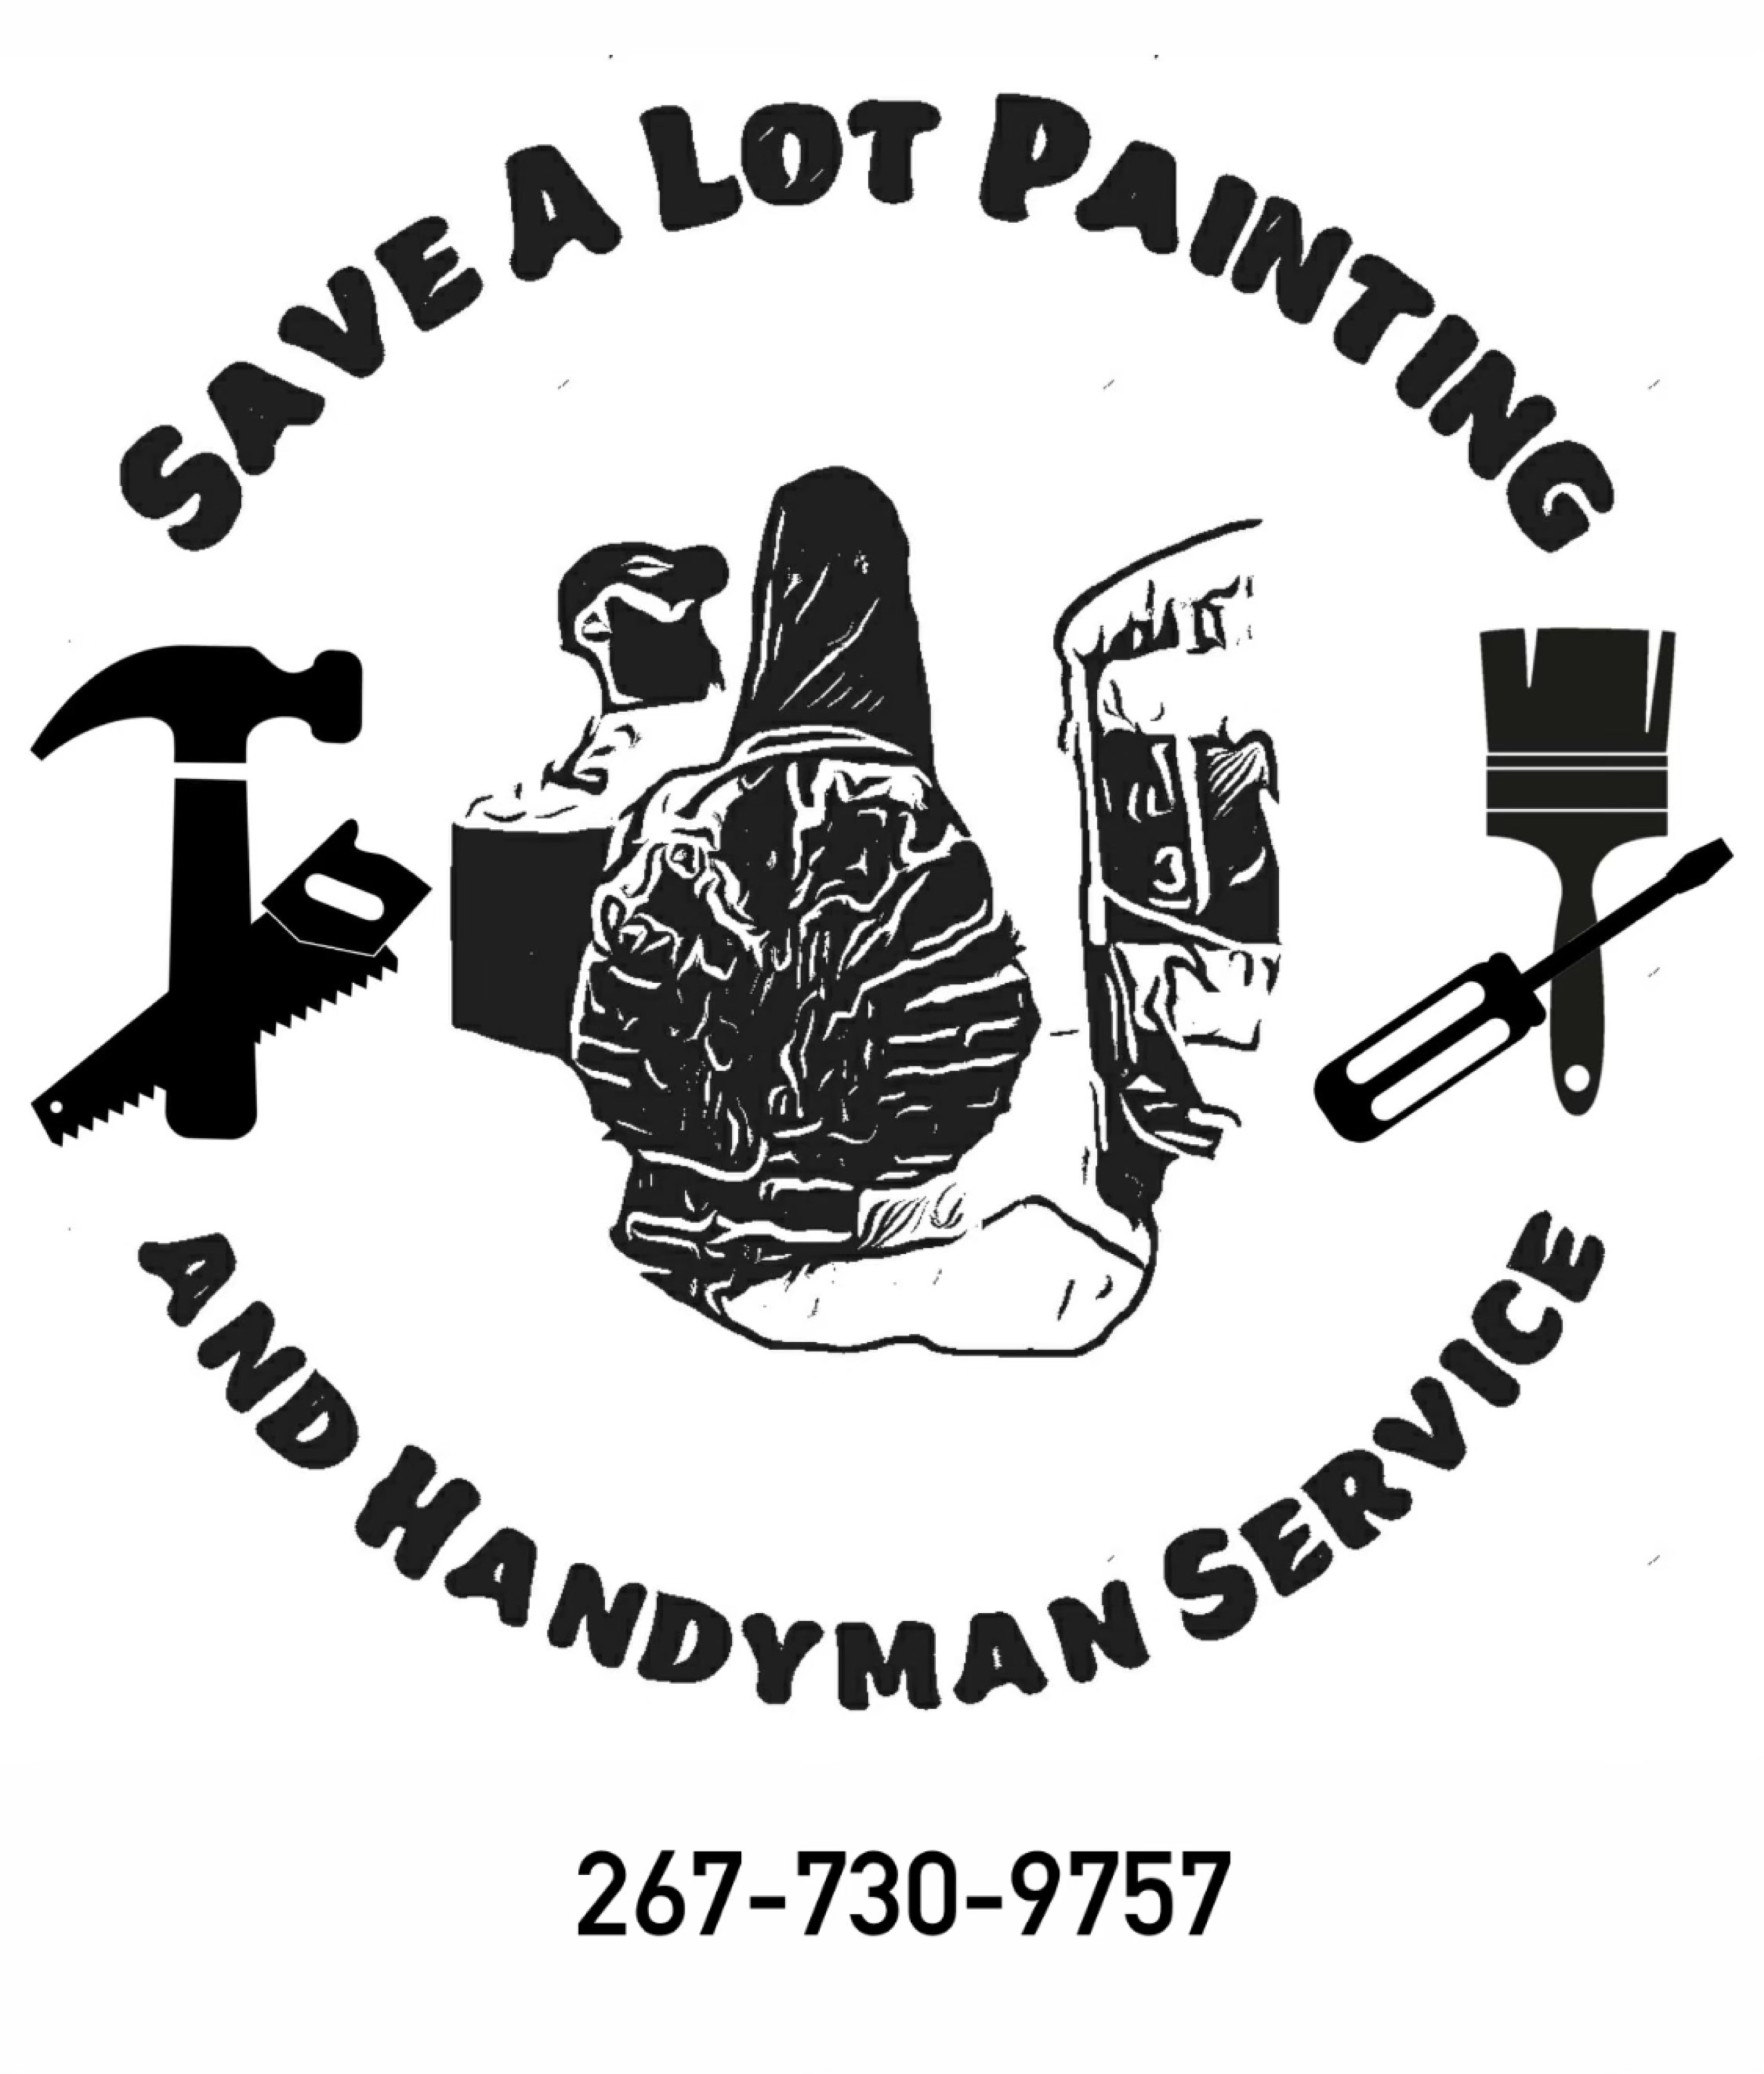 Save A Lot Painting & Handyman Service, LLC Logo